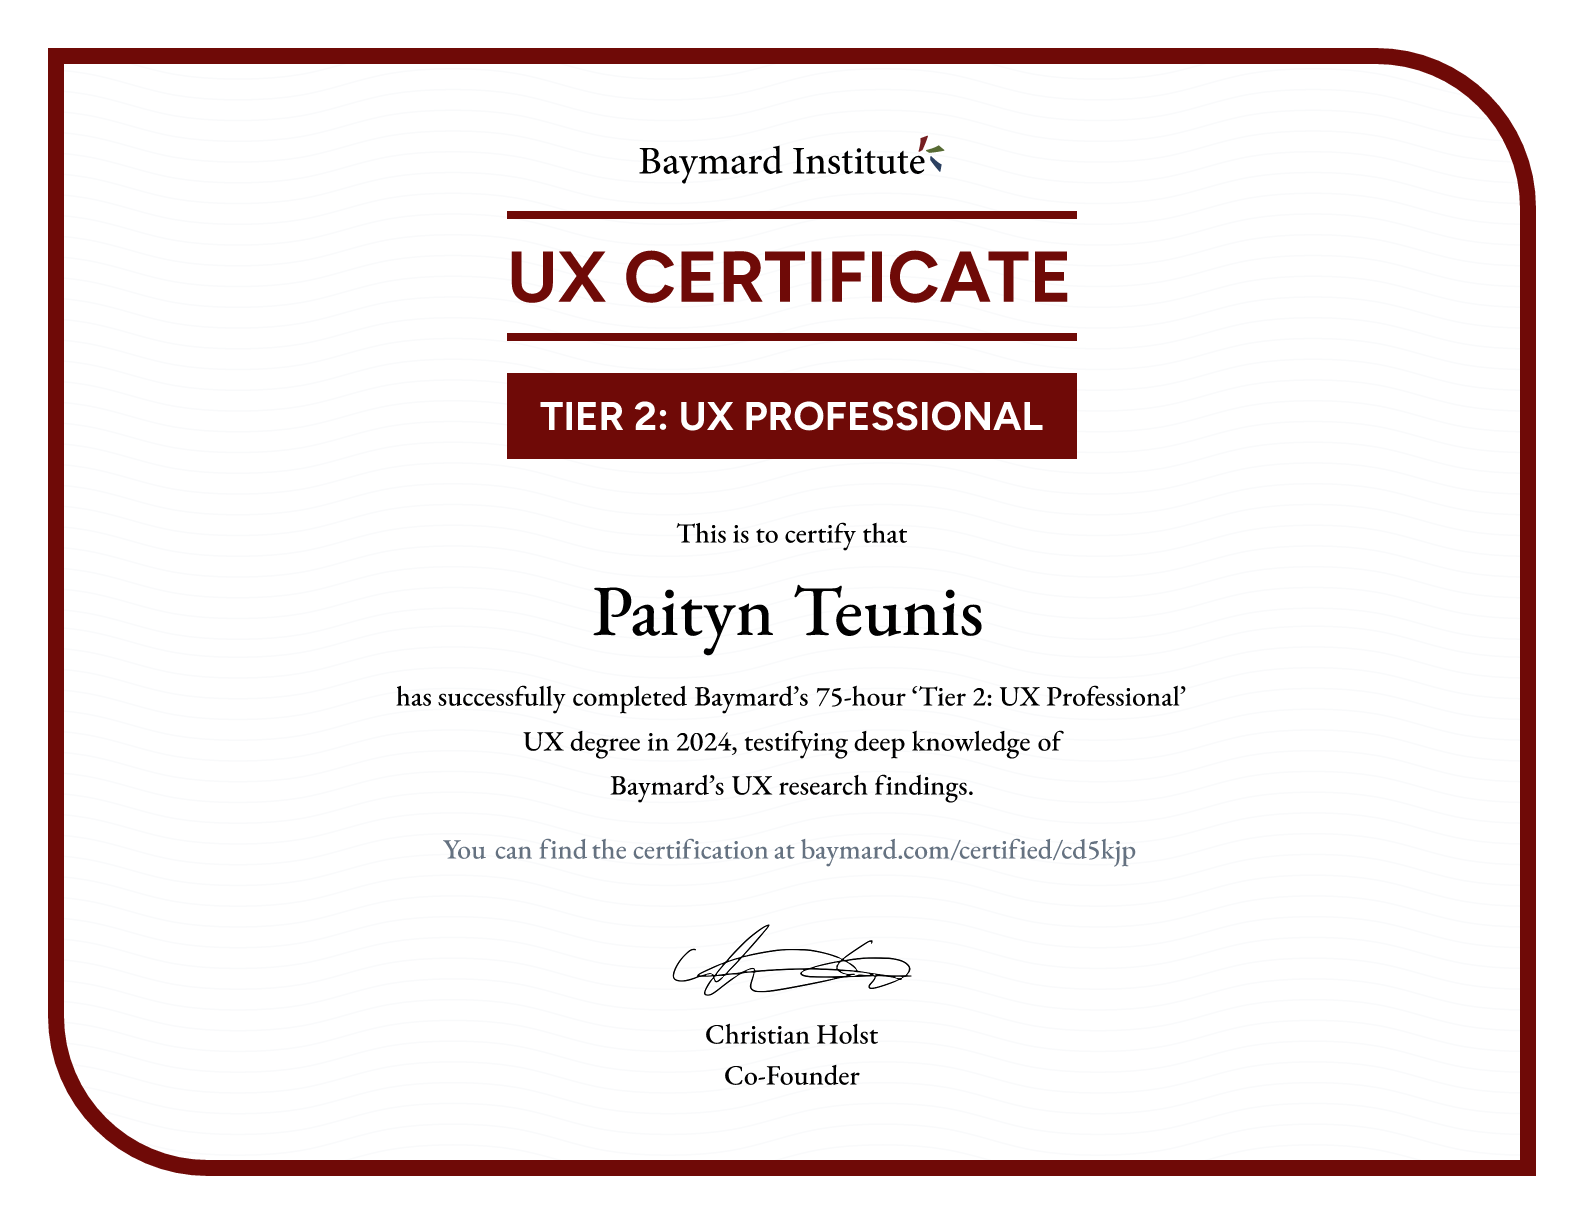 Paityn Teunis’s certificate